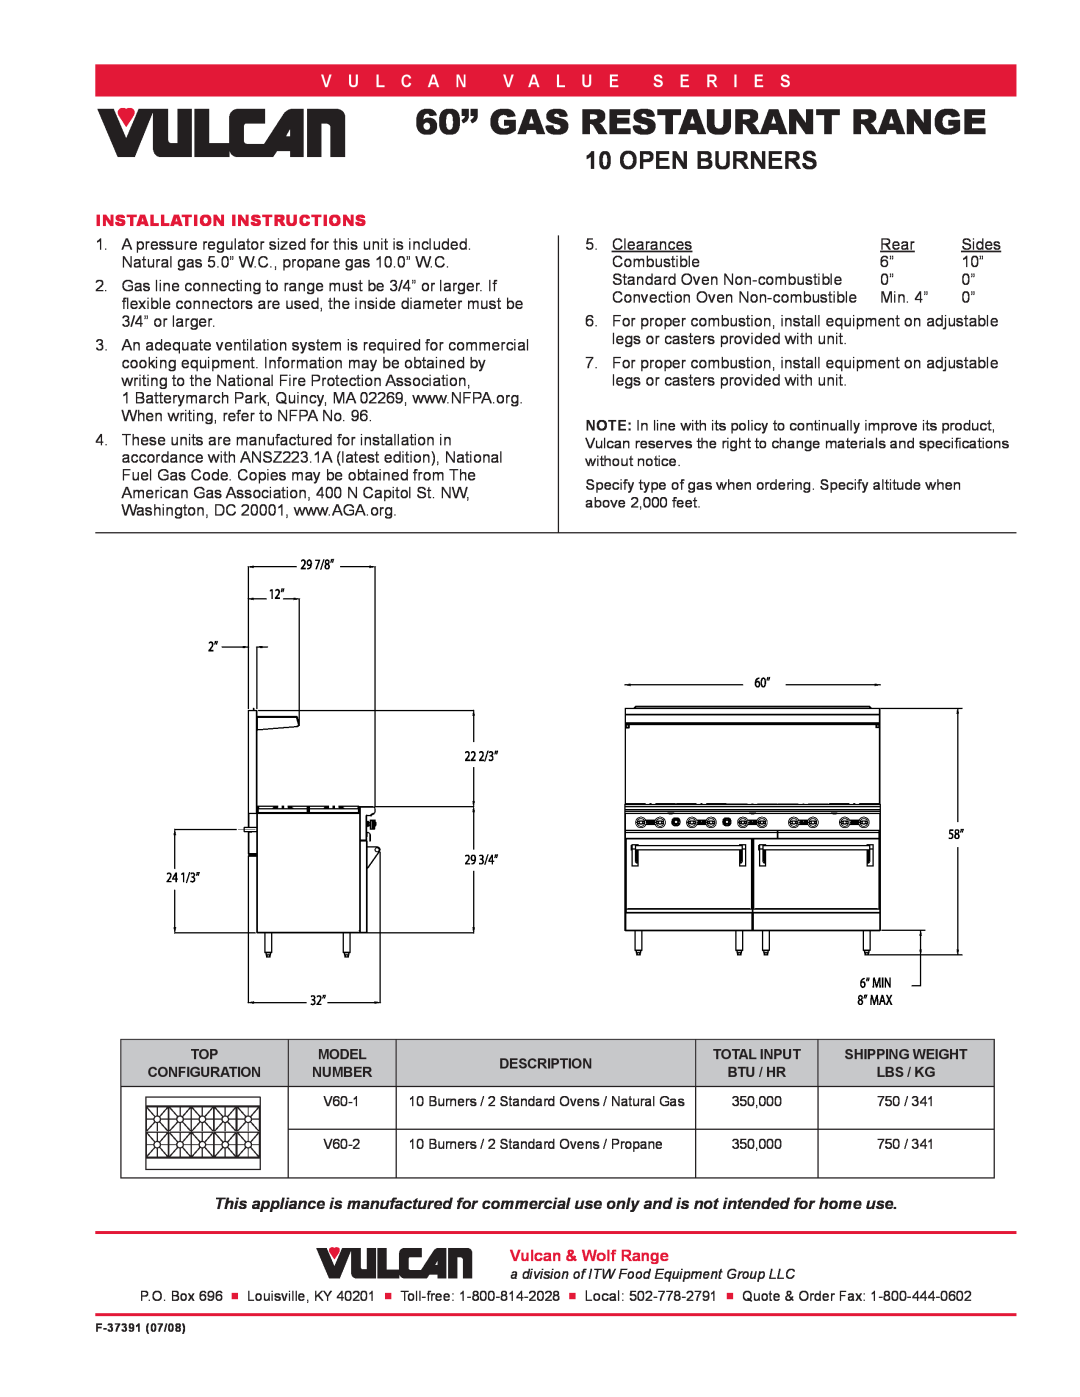 Vulcan-Hart V60-2 Installation Instructions, 60” GAS RESTAURANT RANGE, Open Burners, V U L C A N V A L U E S E R I E S 